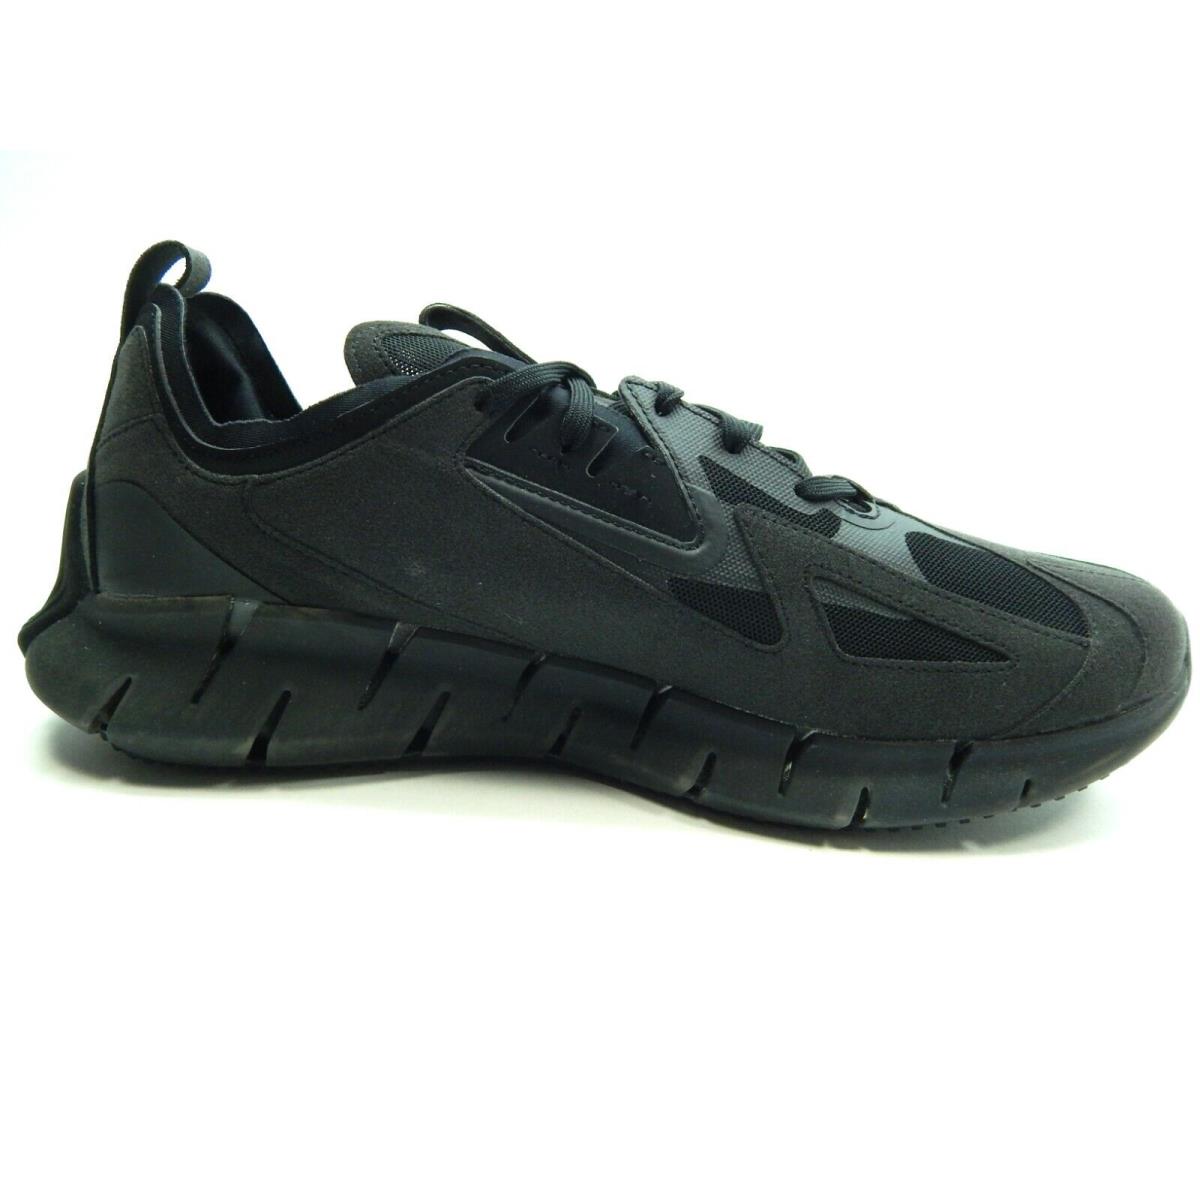 Reebok Zig Kinetica Concept Black True Grey Running Men Shoes Size 12